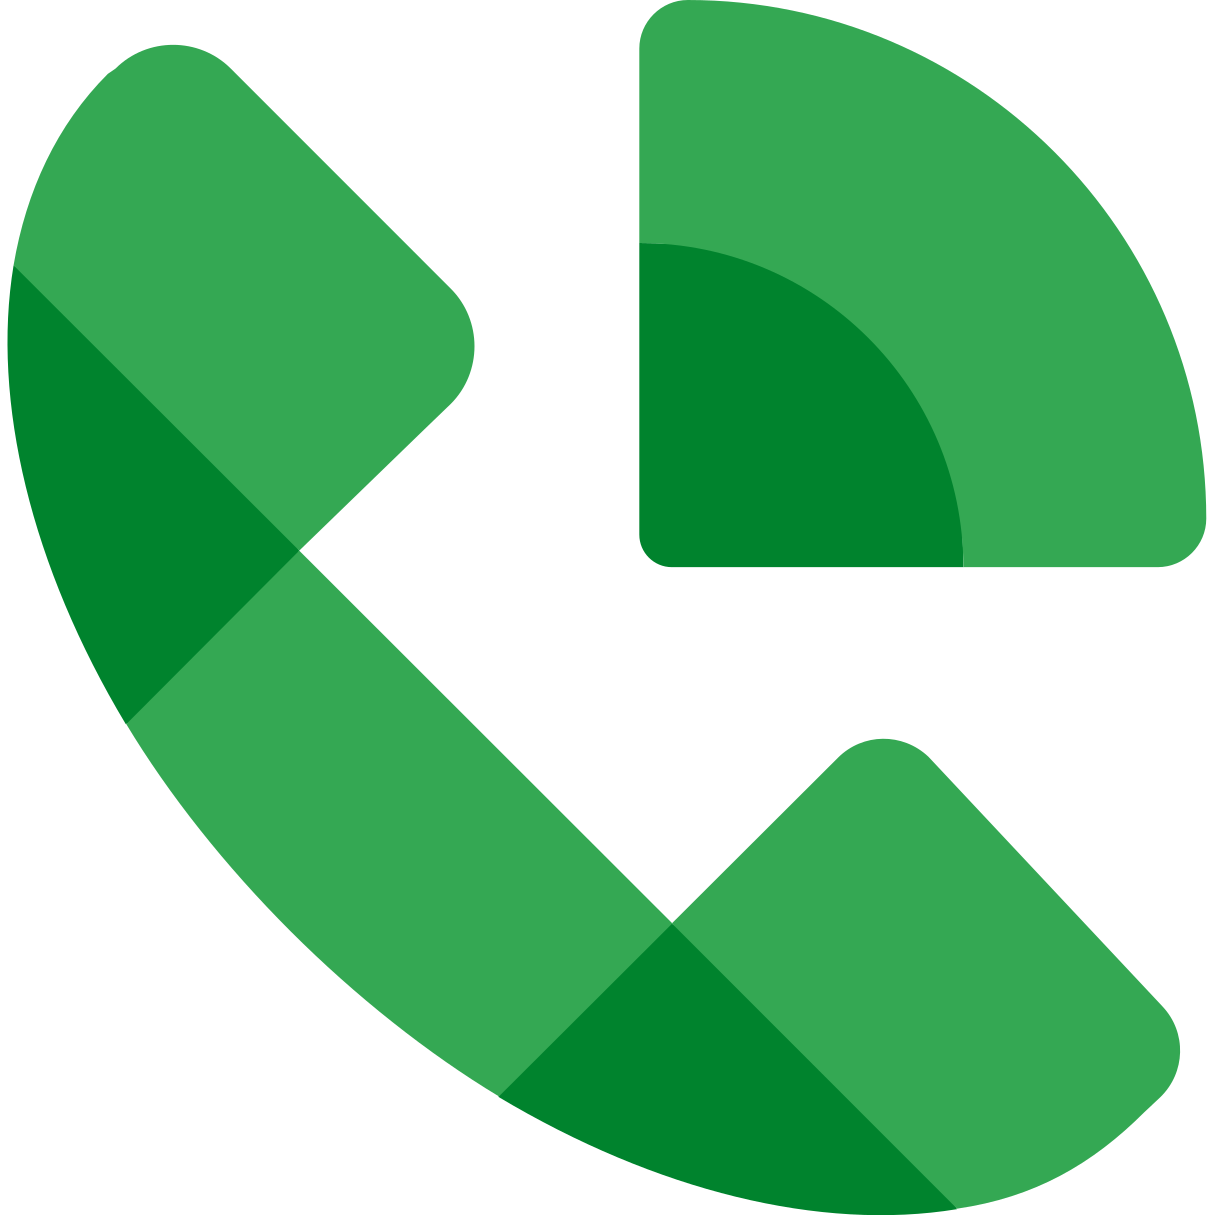 Google Voice logo (it's a phone)